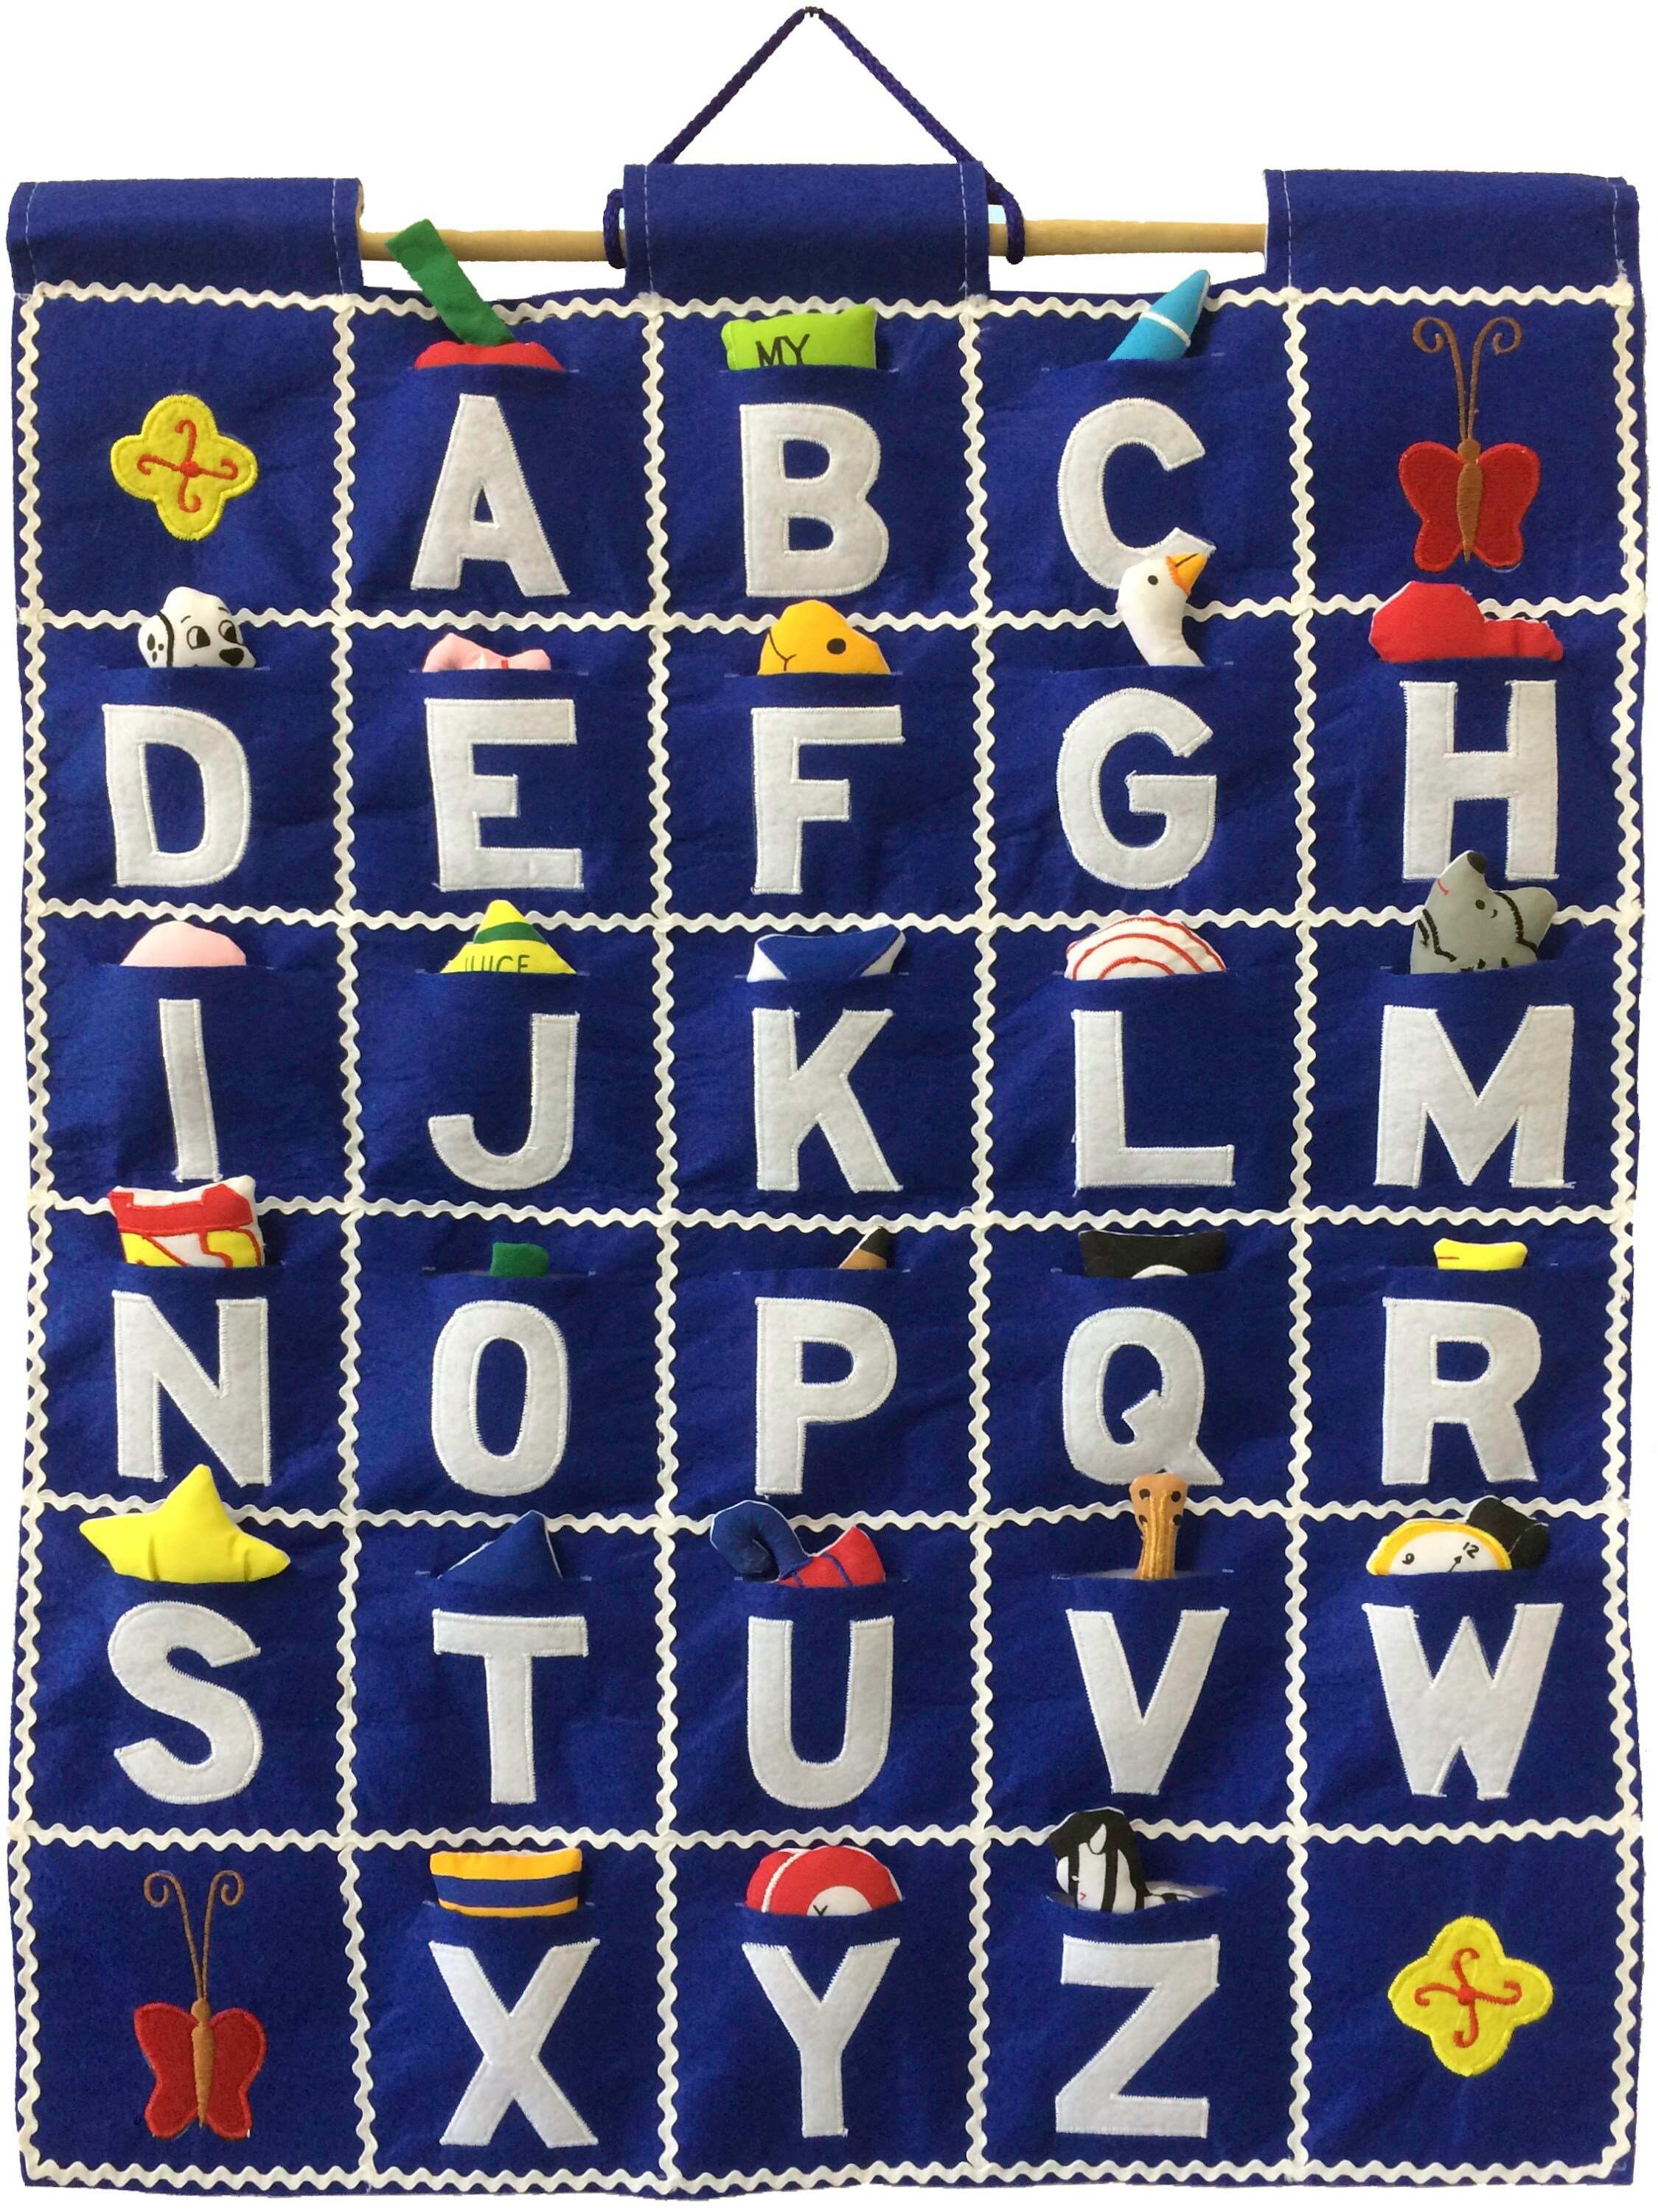 Alphabet Word Wall Cards & Abc Chart 023  Alphabet word wall cards,  Alphabet word wall, Word wall cards